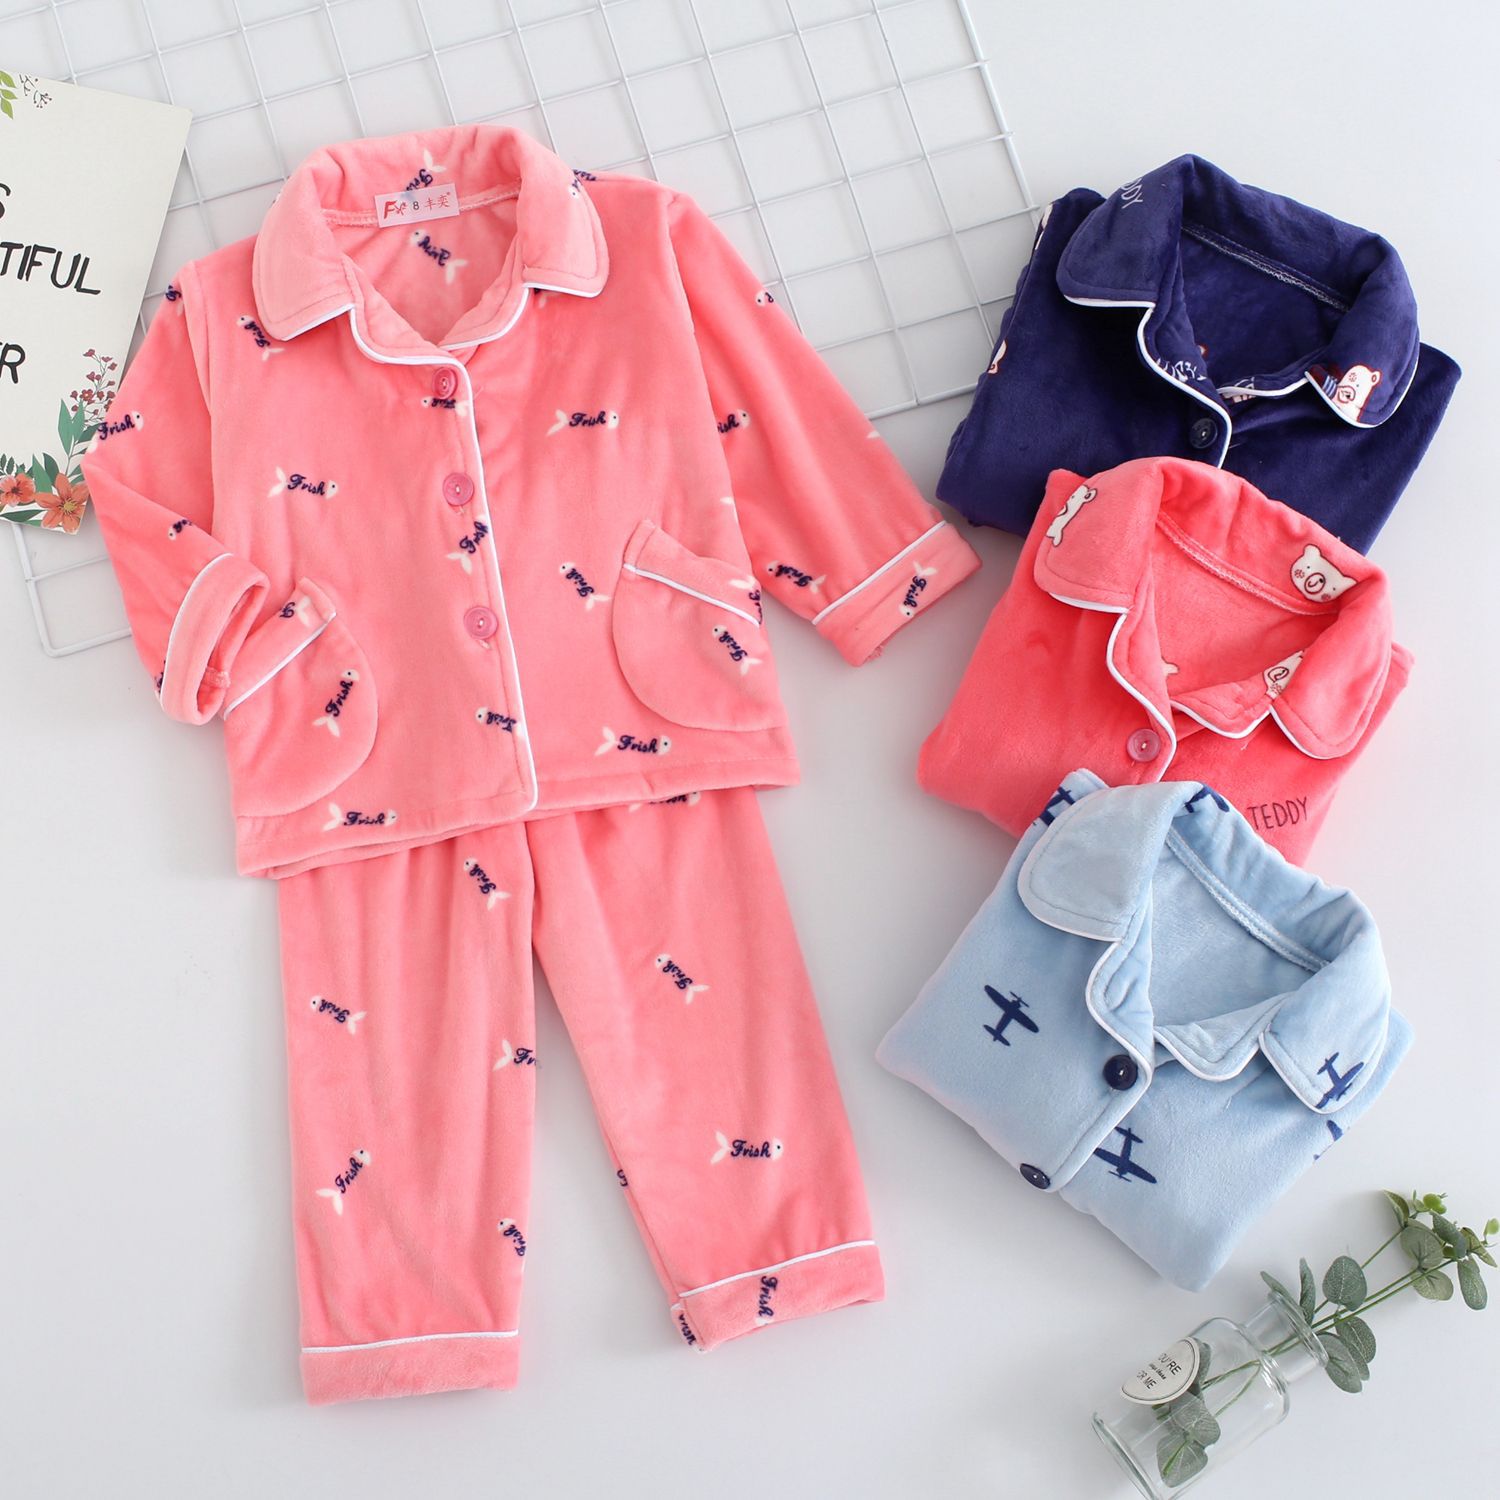 2019 Autumn and winter new pattern CUHK Sea island Home Furnishings children Cartoon pajamas CUHK Pyjamas suit